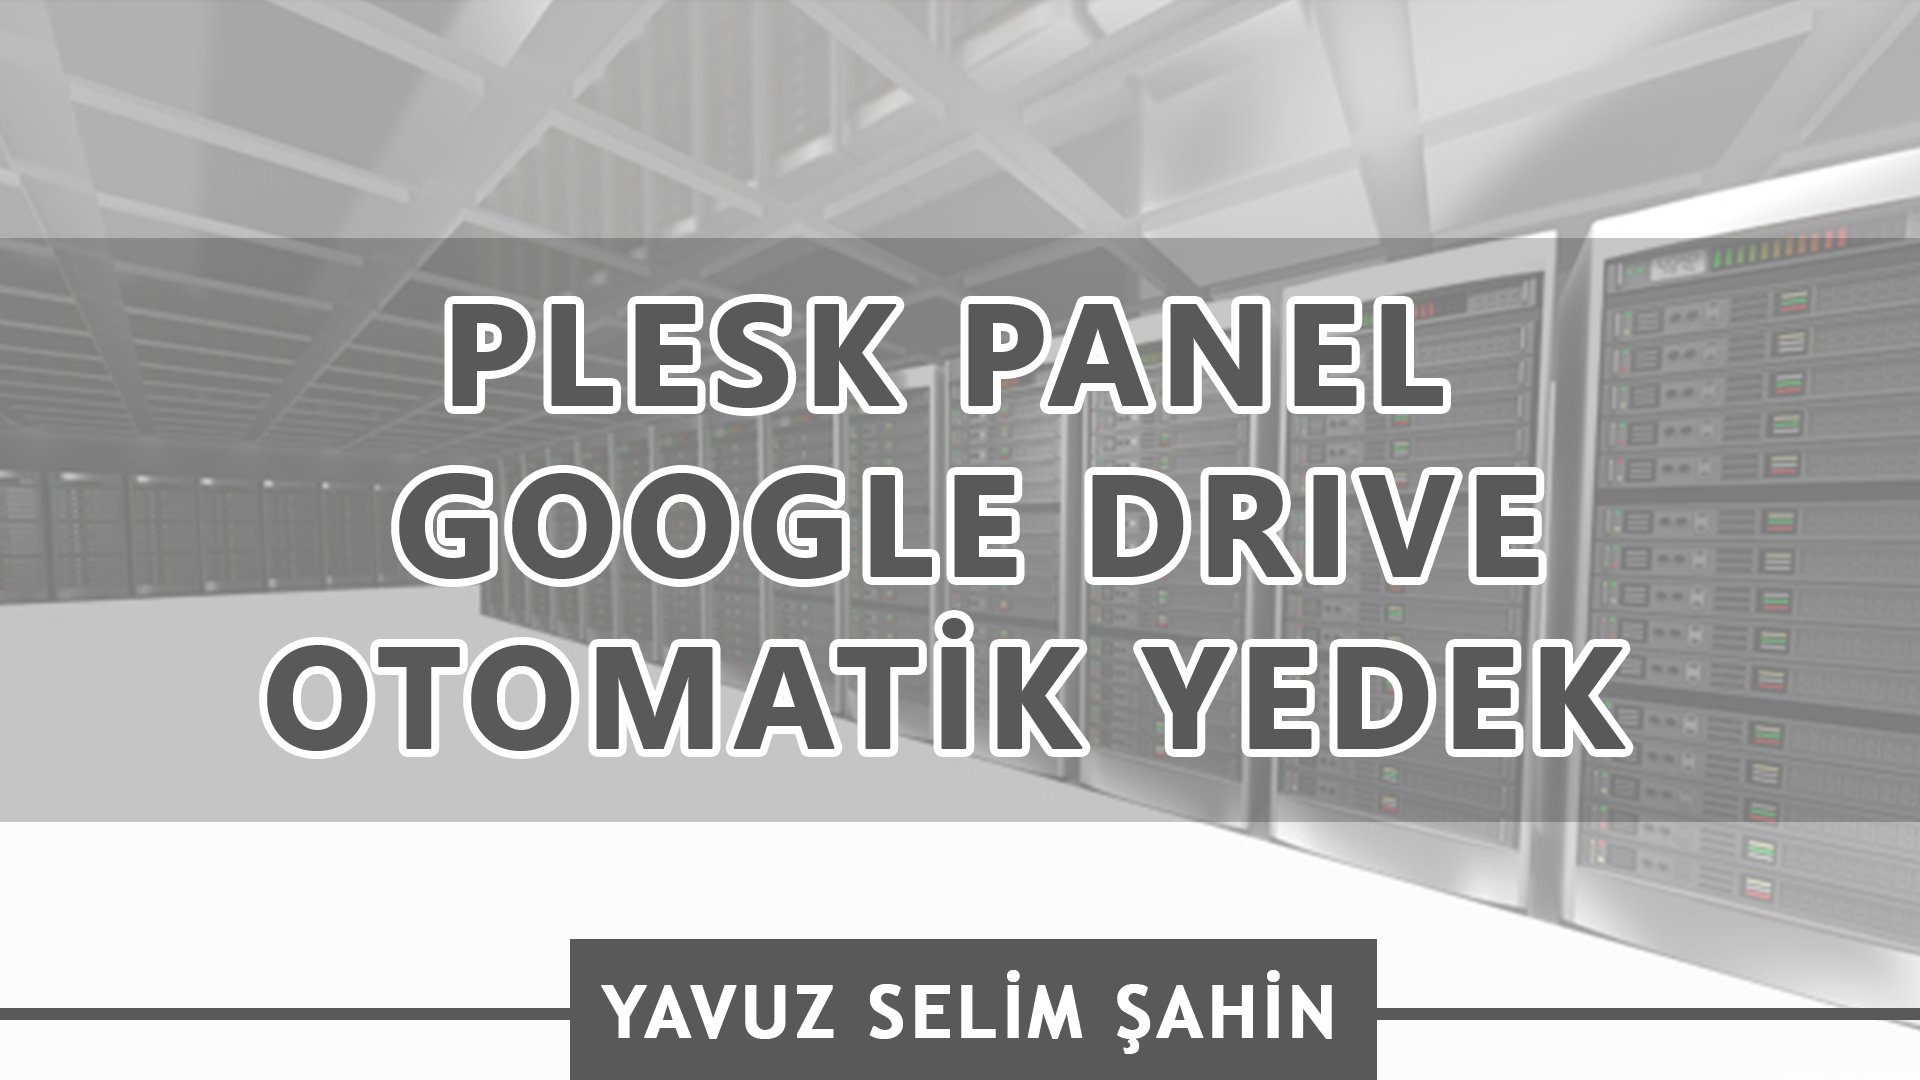 Plesk Panel Google Drive Otomatik Yedekleme | Plesk Panel Google Drive Backup